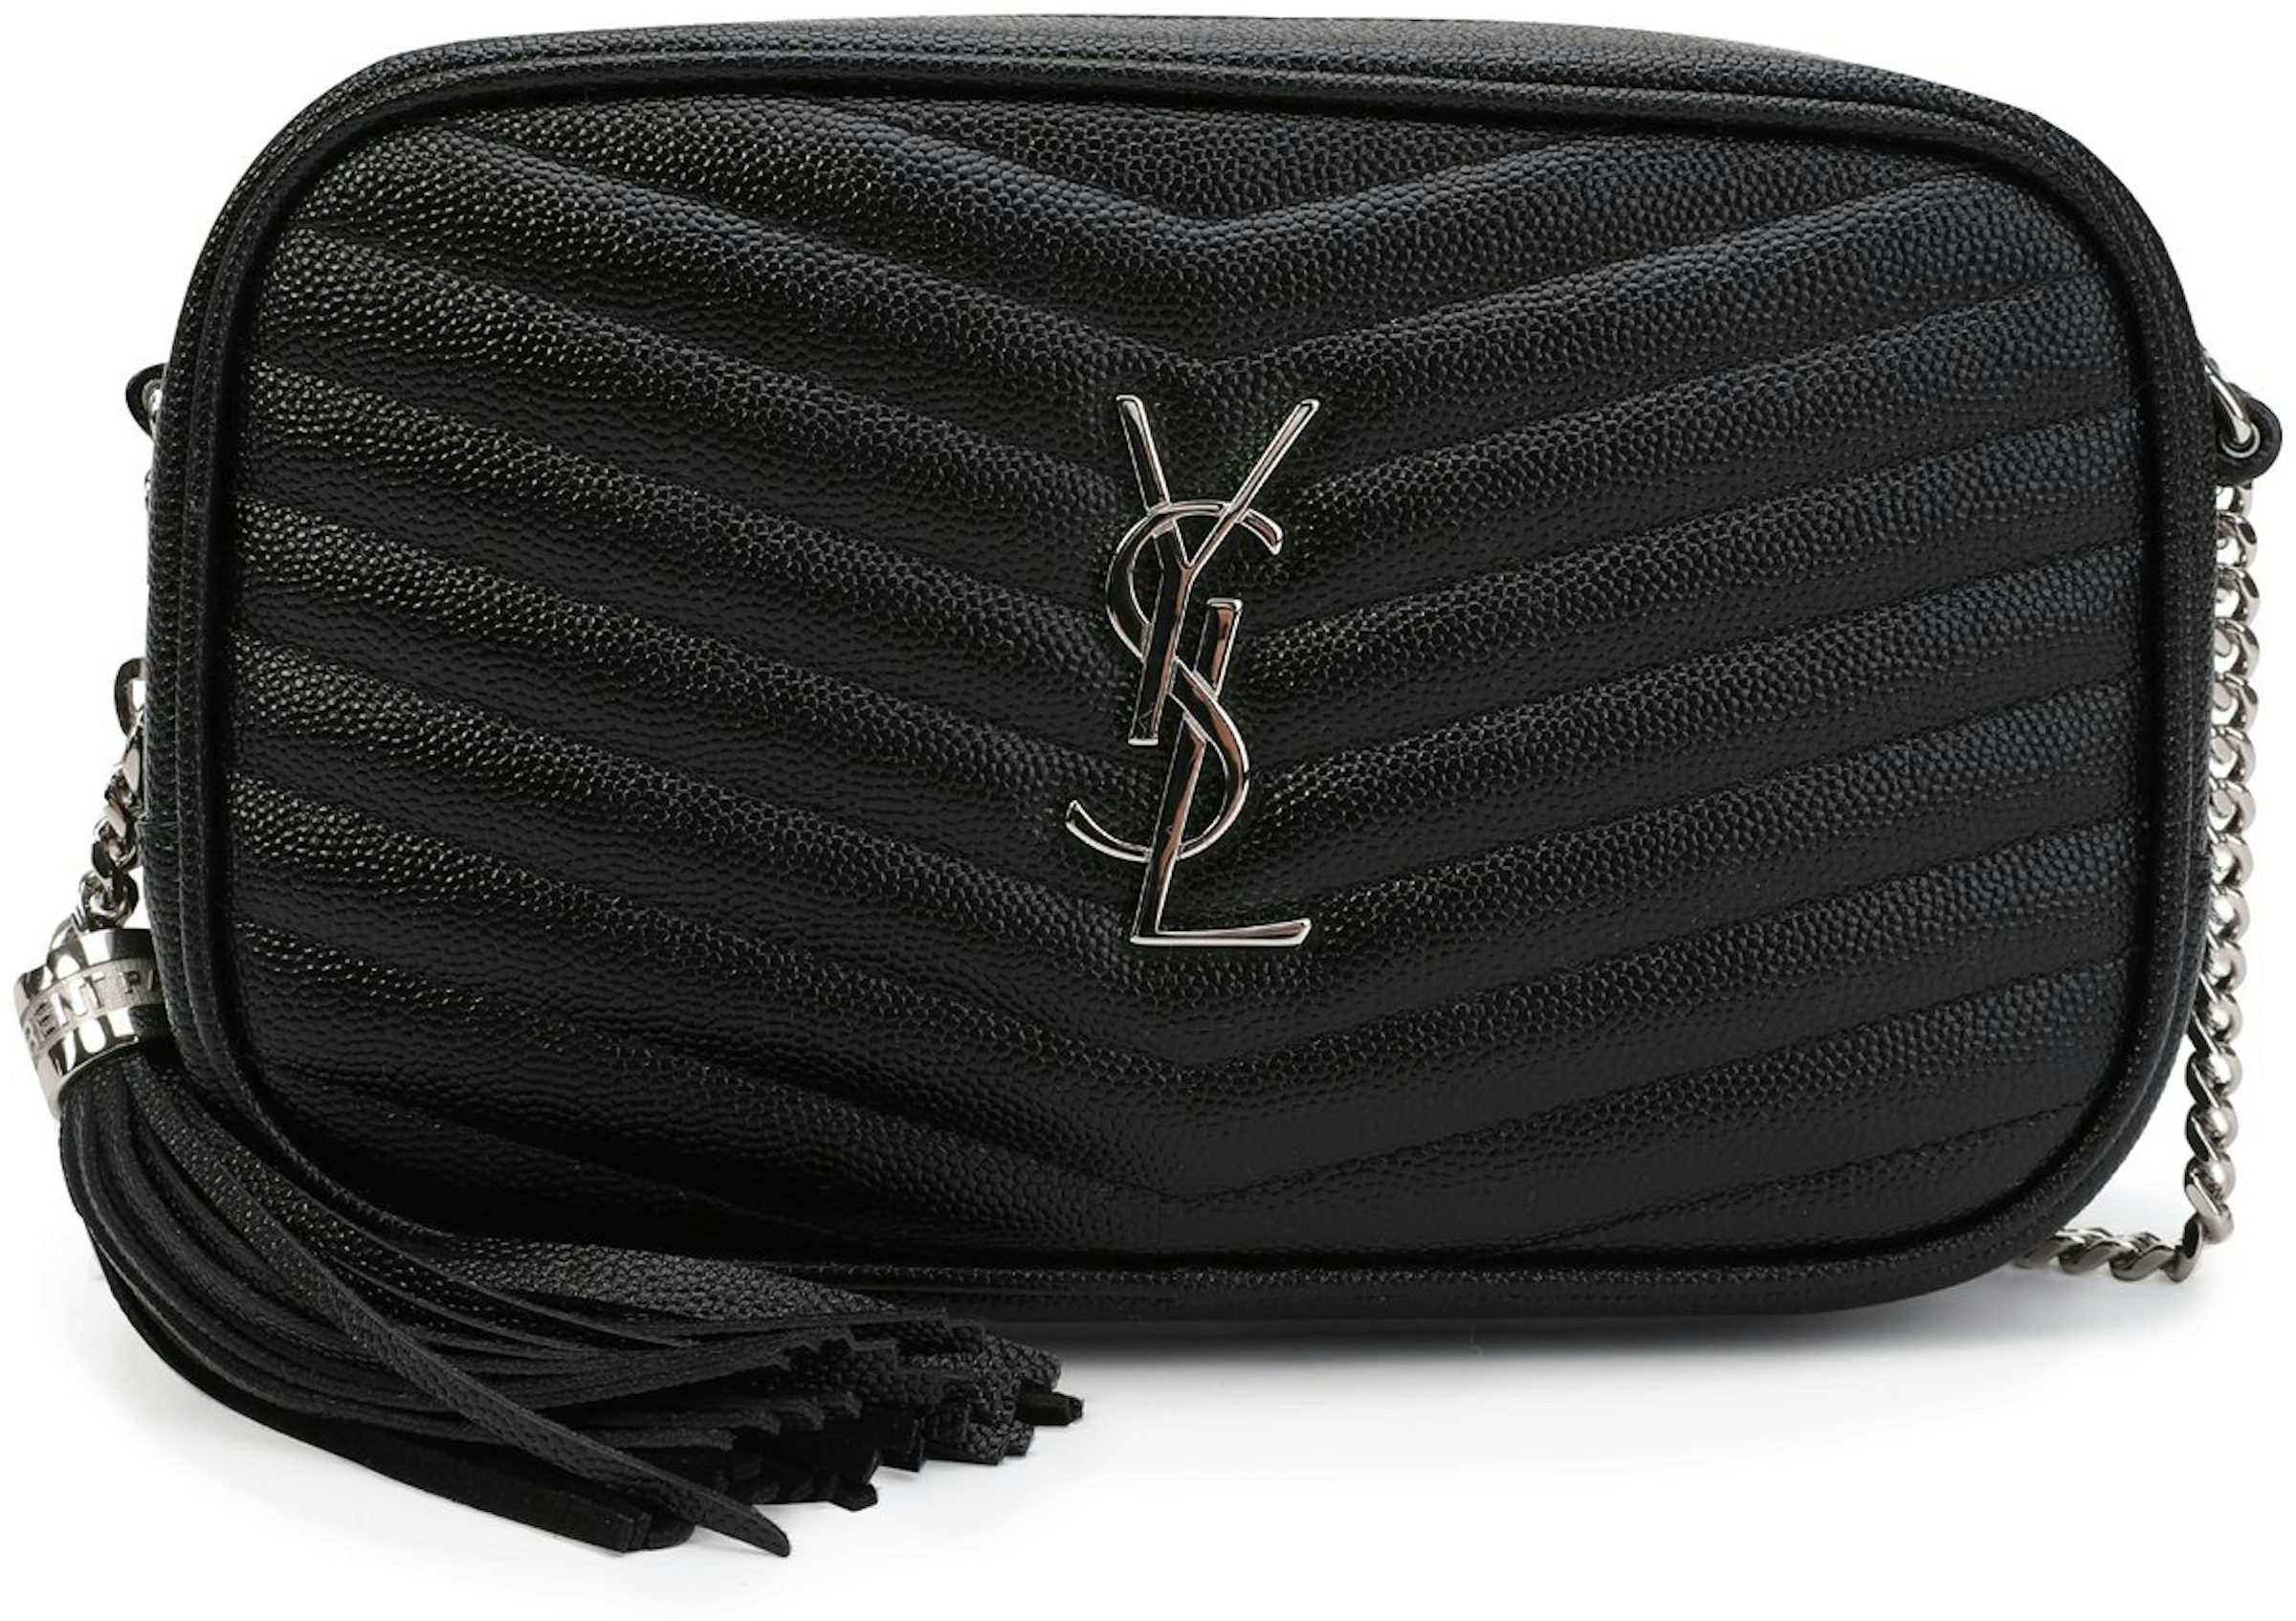 Under $1200: Saint Laurent's NEW Crossbody Bag